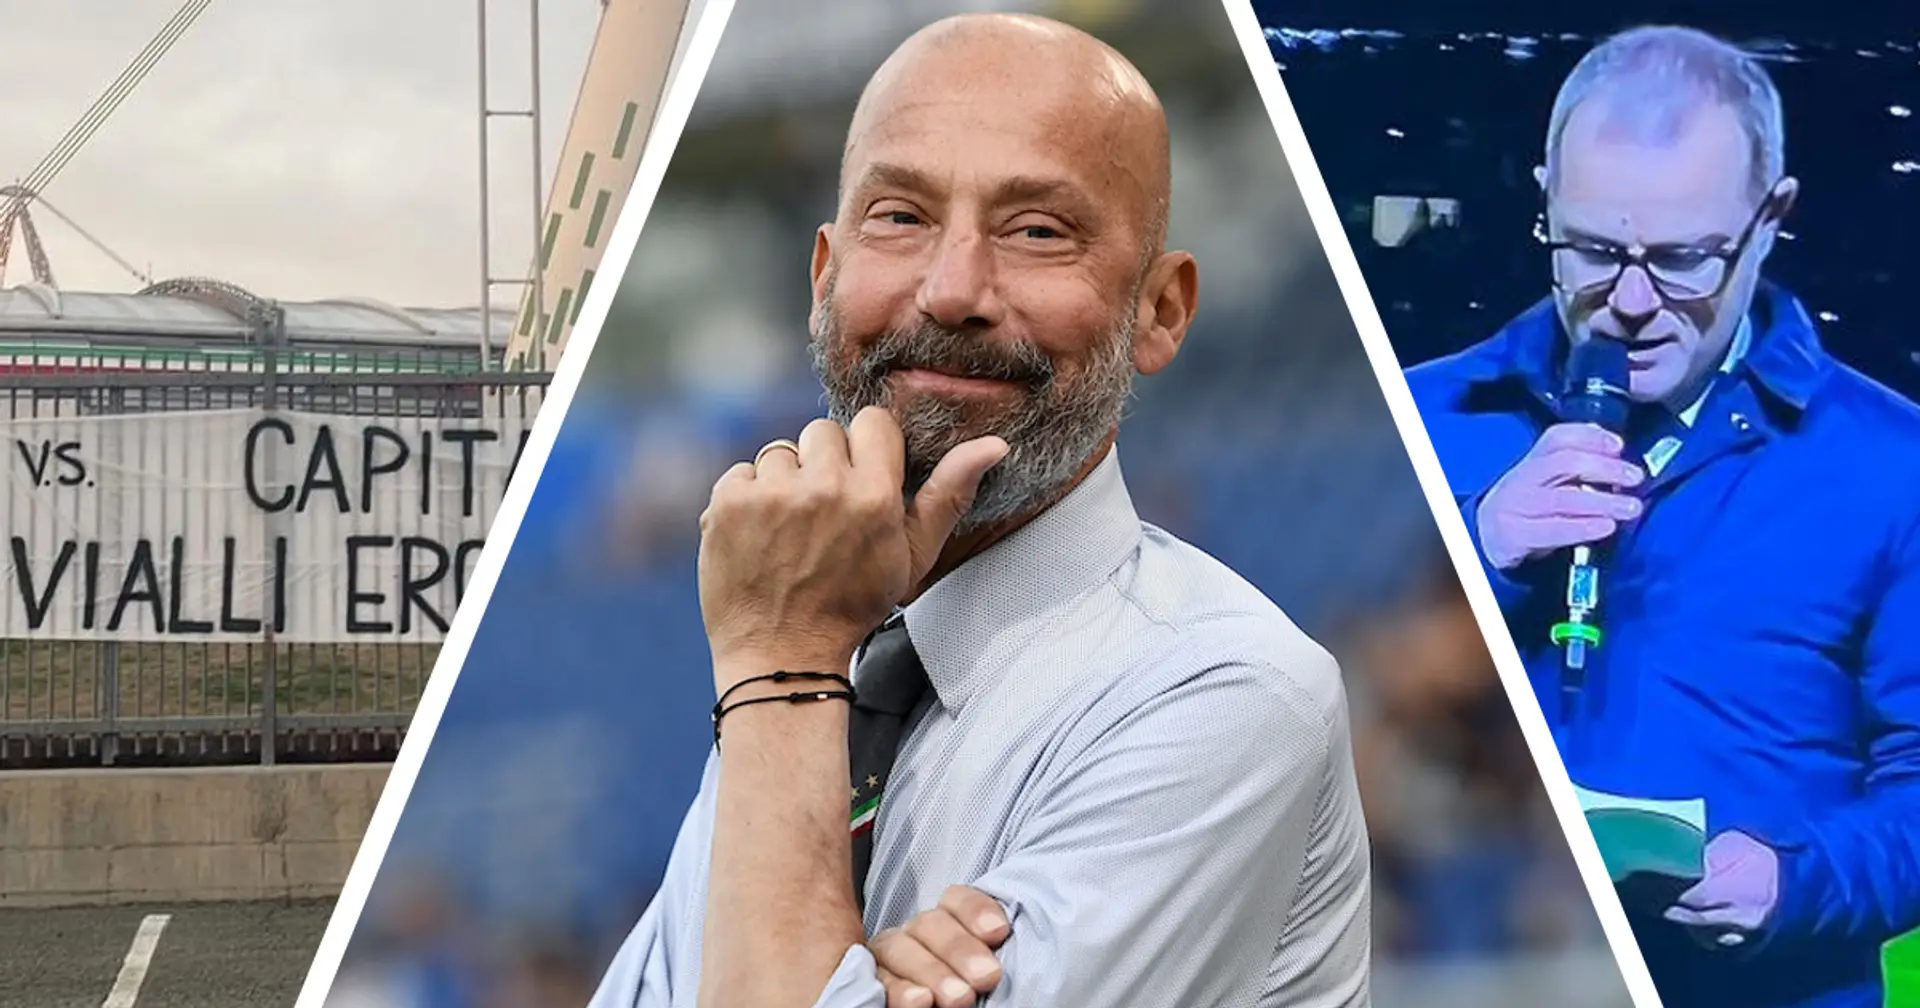 "Addio mio Capitano": Pessotto in lacrime, la Juventus e lo stadium ricordano Gianluca Vialli